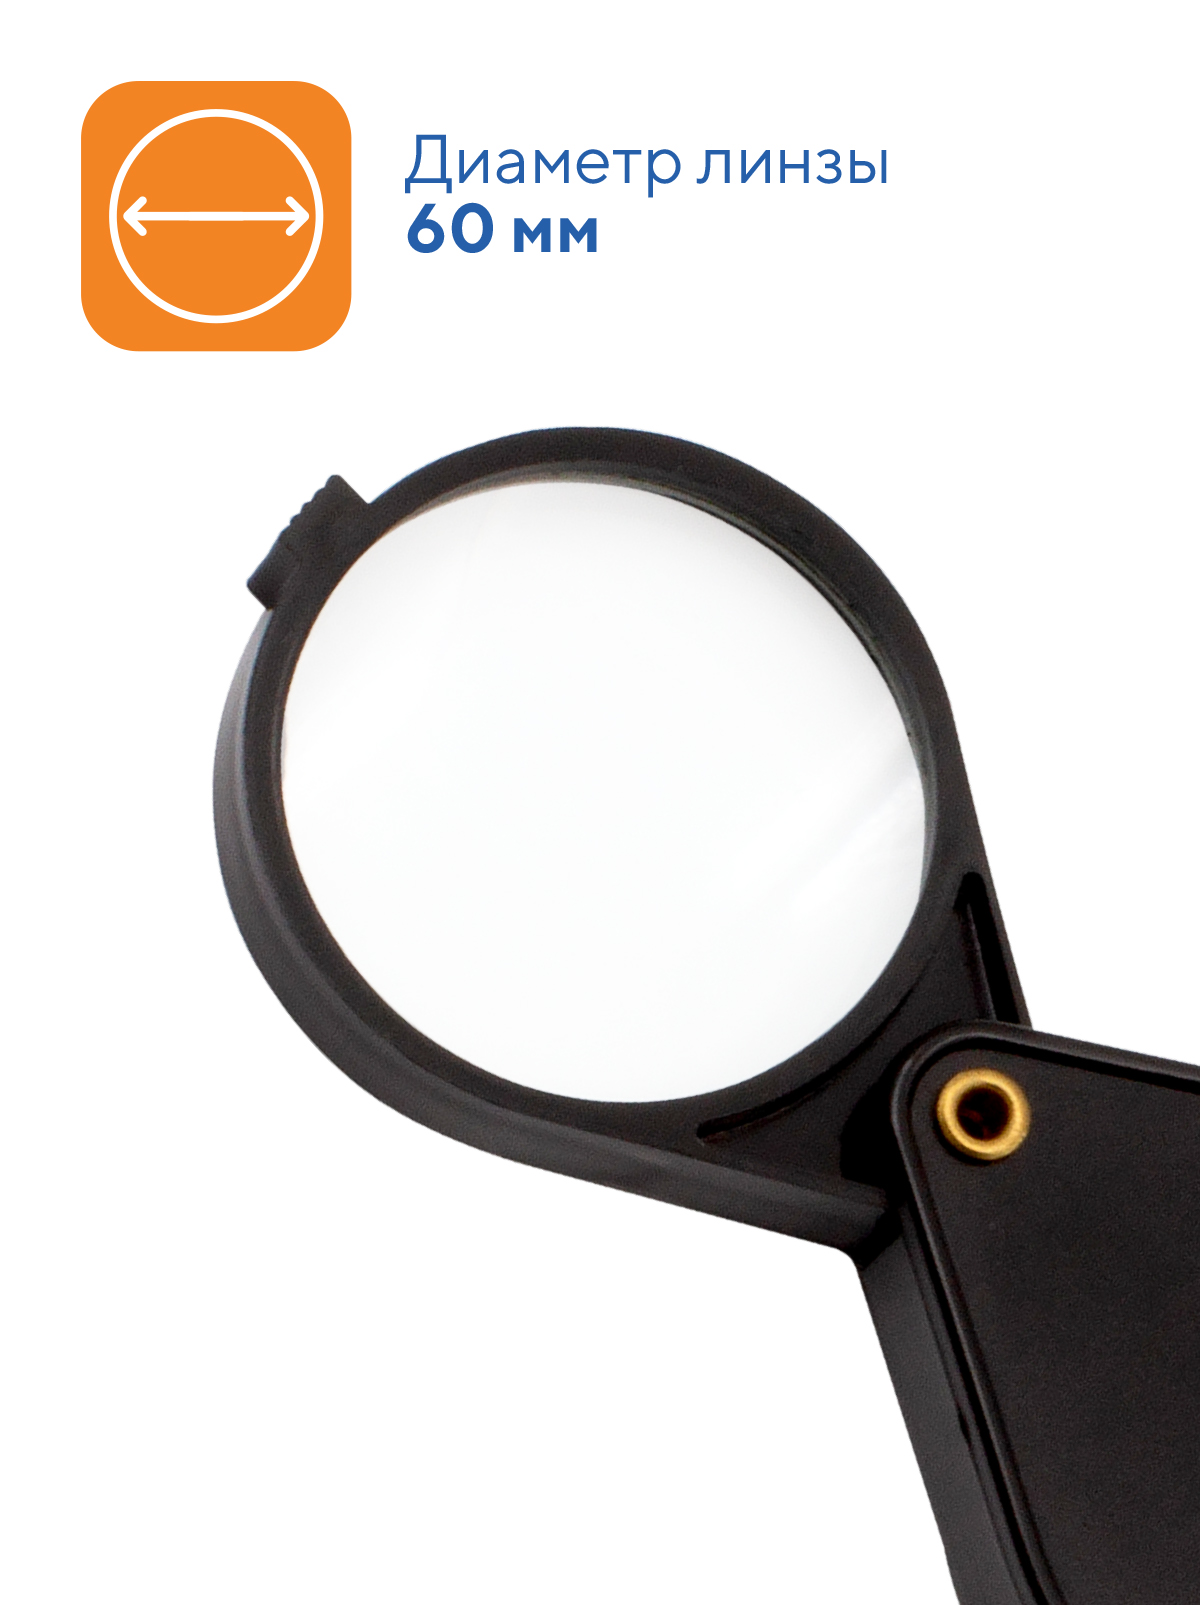 Лупа канцелярская WORKMATE диаметр 60 мм 5-ти кратное увеличение складная черный - фото 2